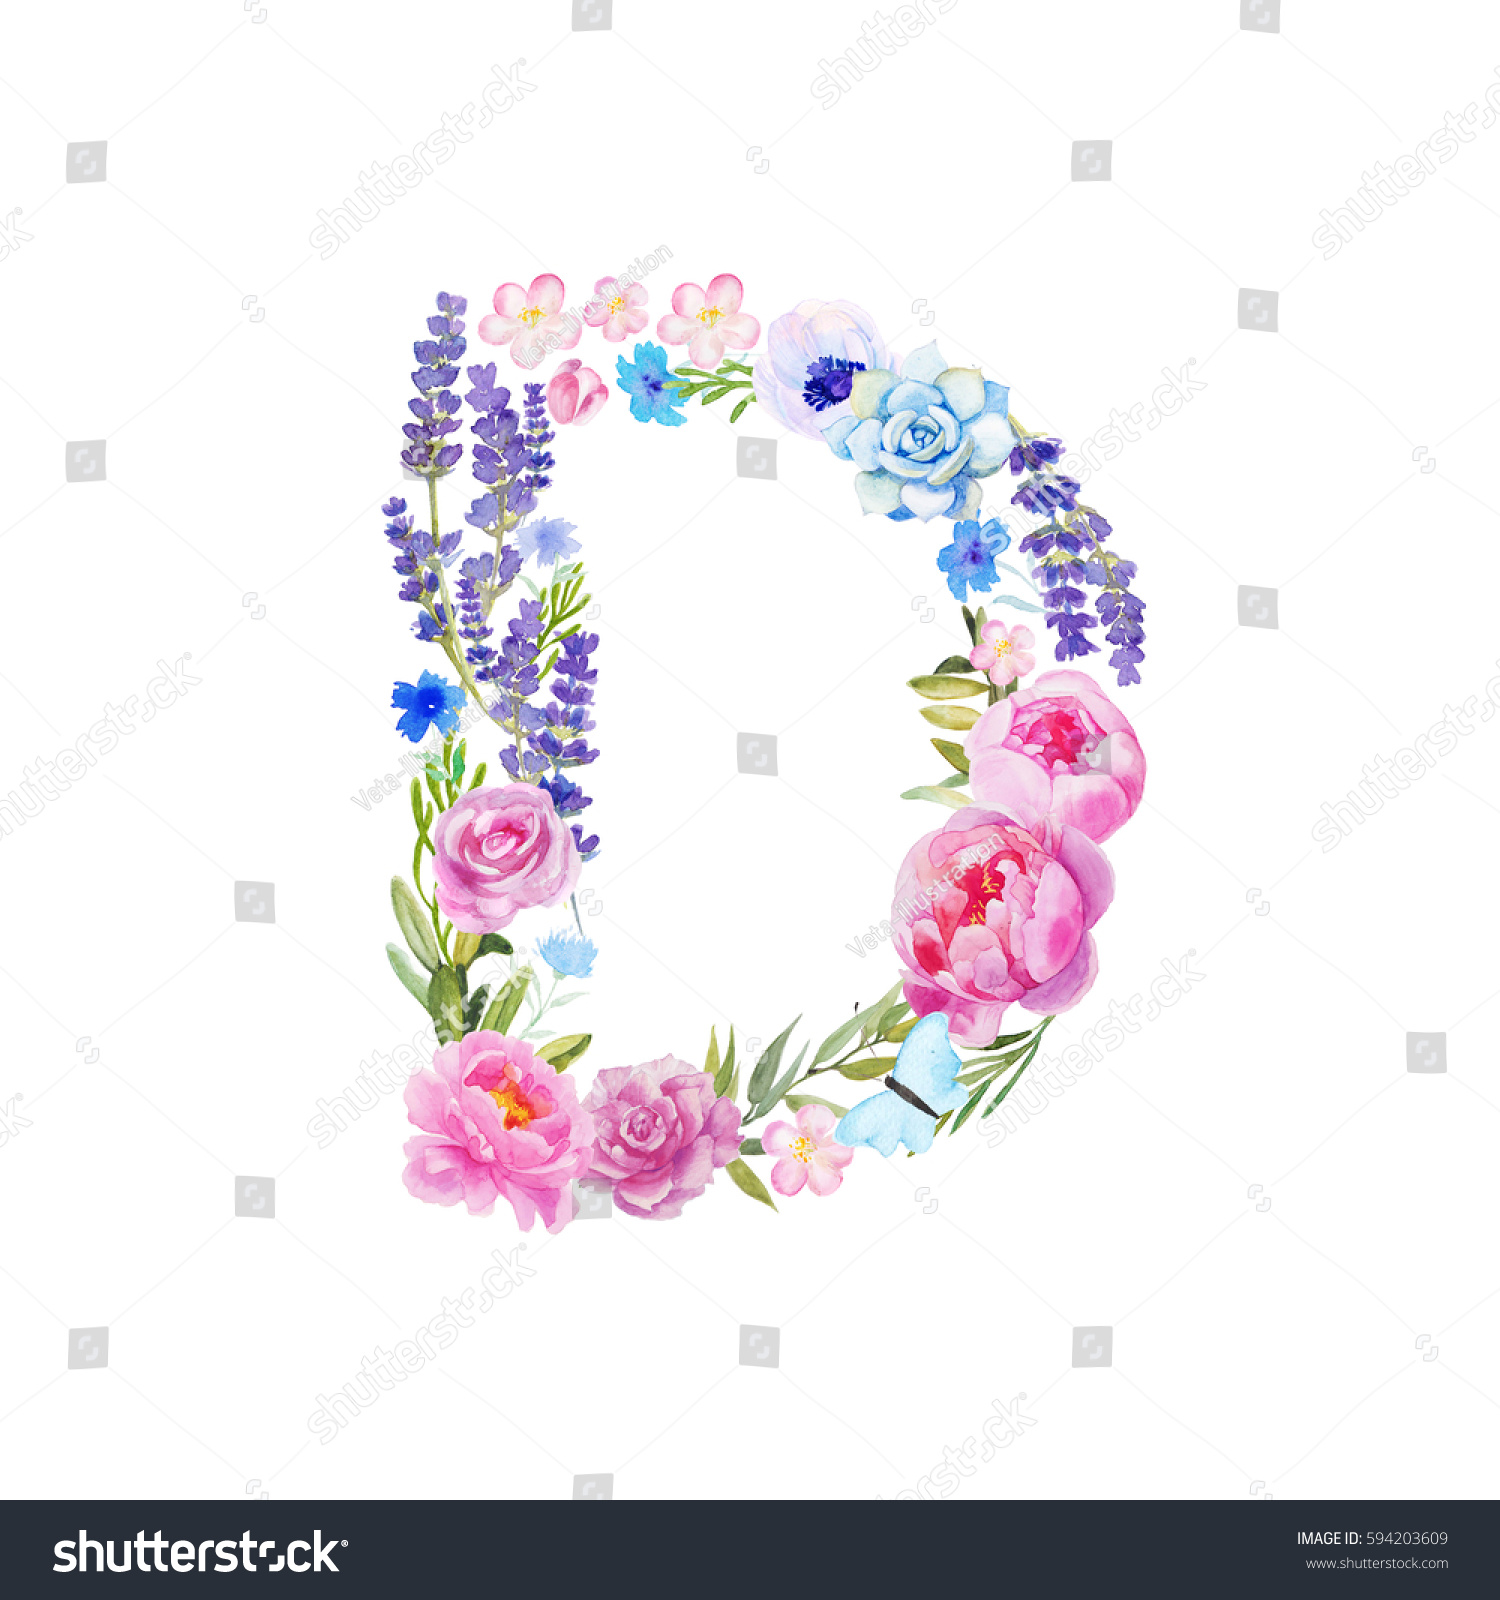 Download Watercolor Floral Monogram Letter D On Stock Illustration 594203609